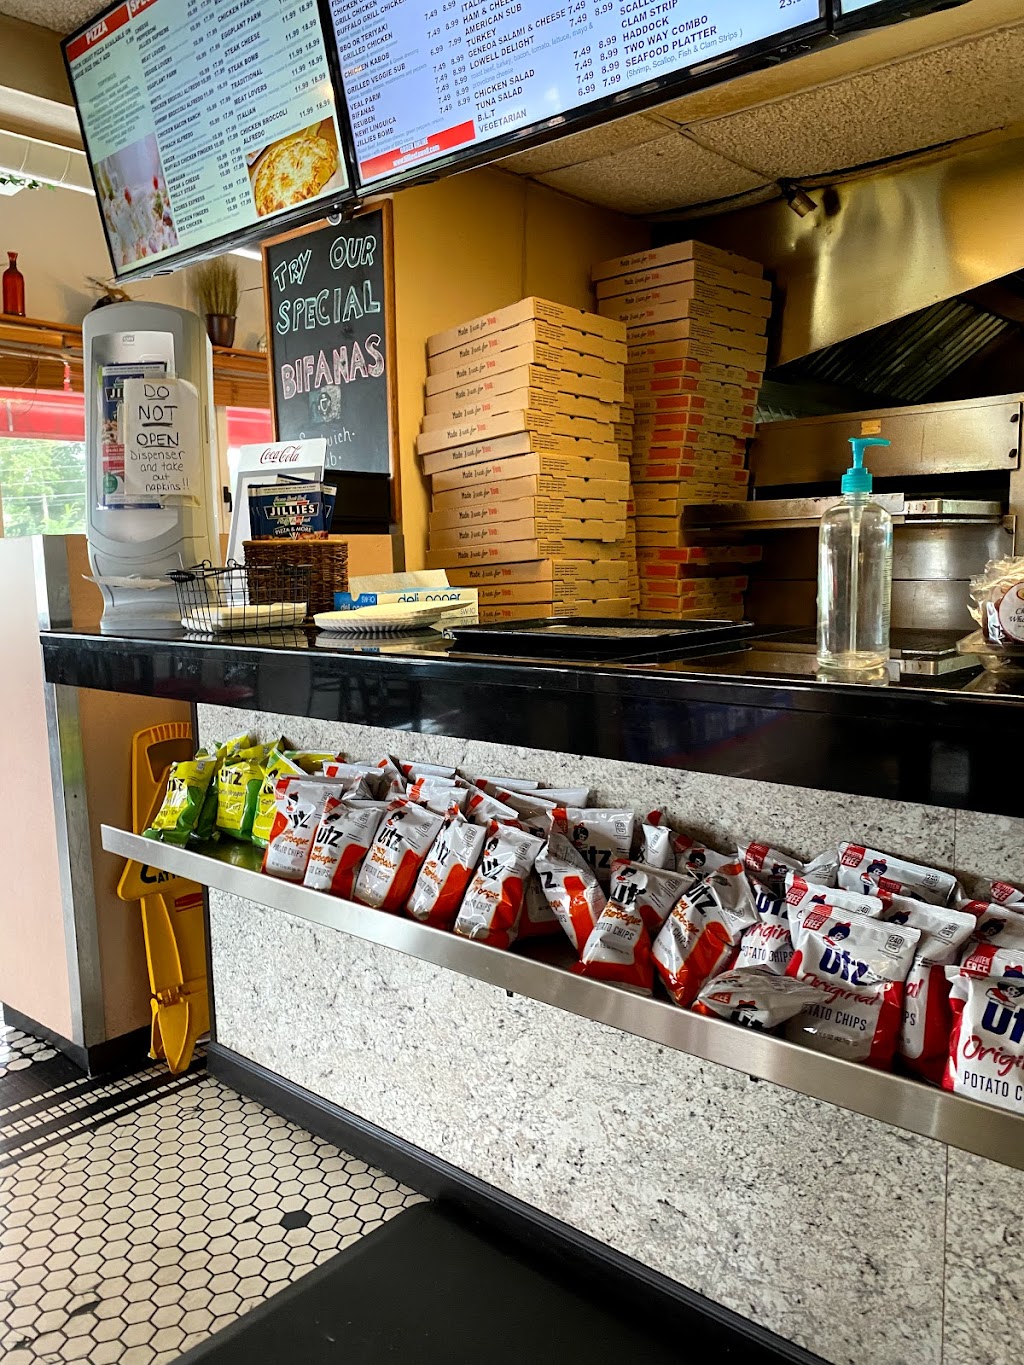 Jillies Roast Beef & Pizza | 600 Rogers St, Lowell, MA 01852, USA | Phone: (978) 452-3005